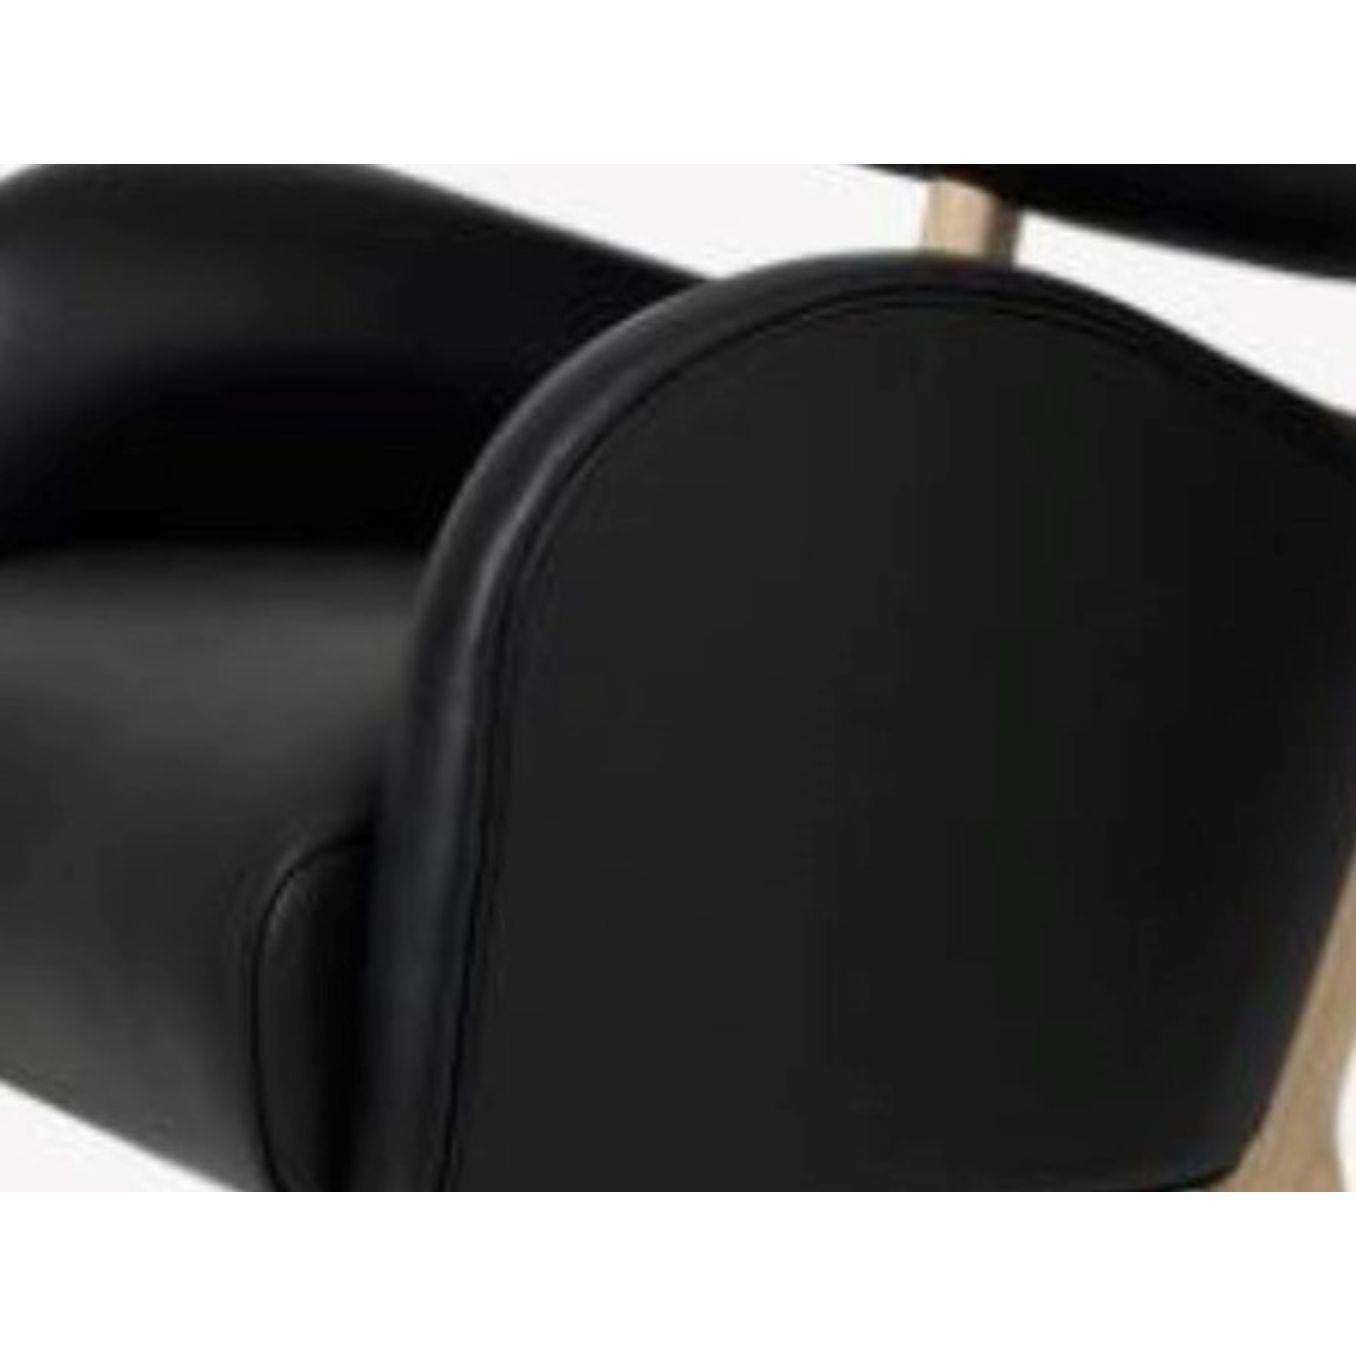 582 Raf Simons Vidar 3 My Own Chair by Lassen For Sale 3